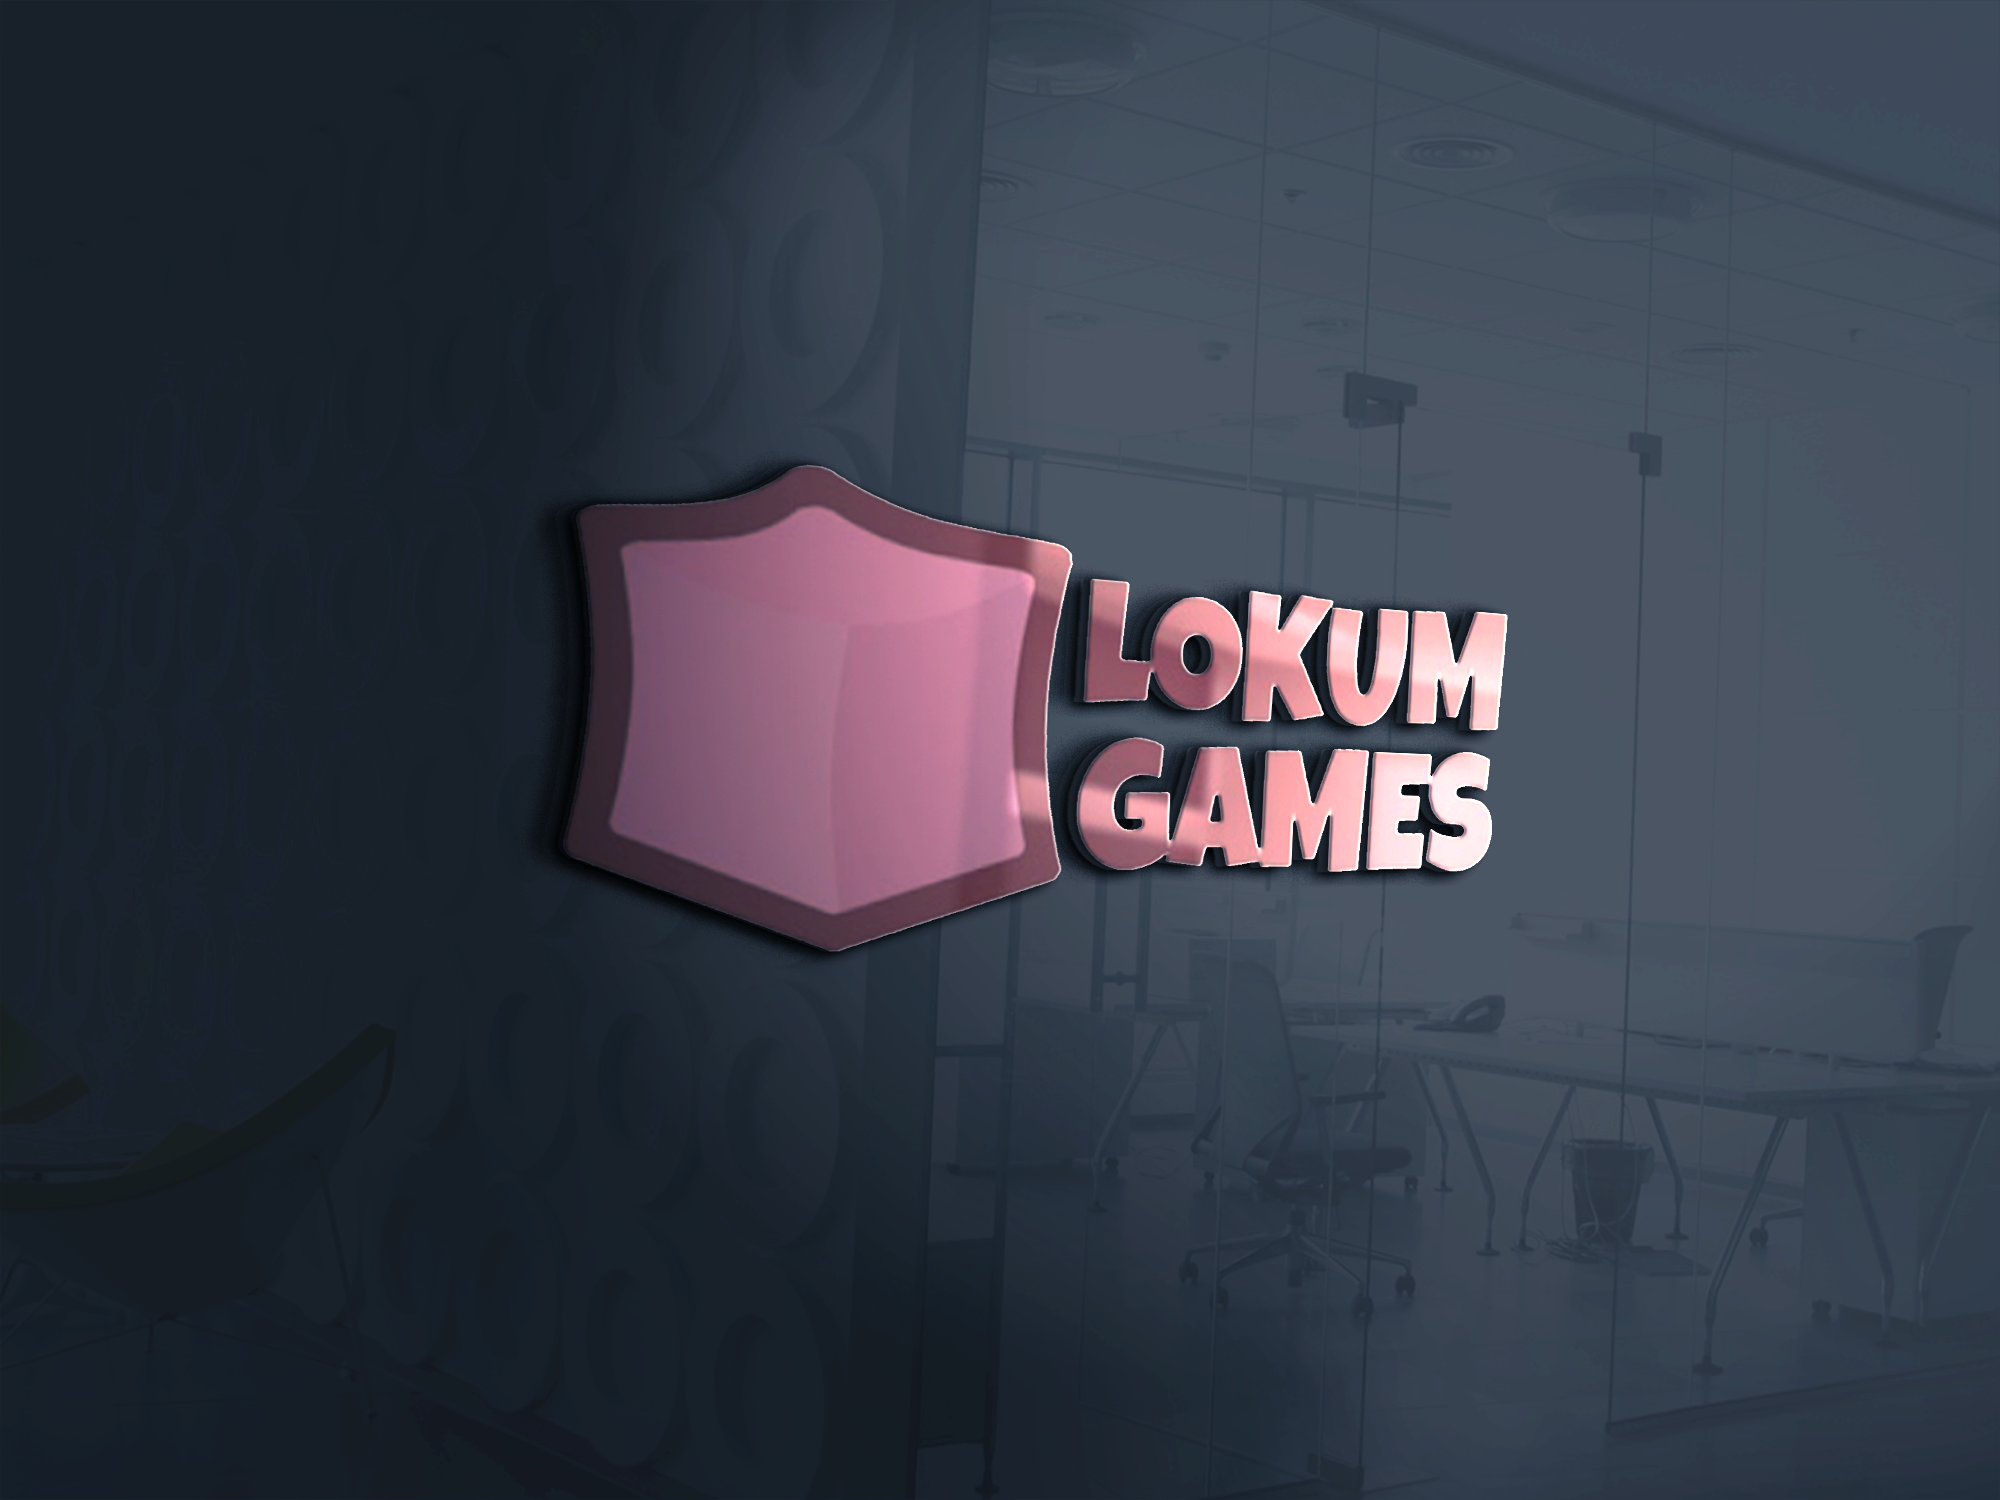 Lokum Games